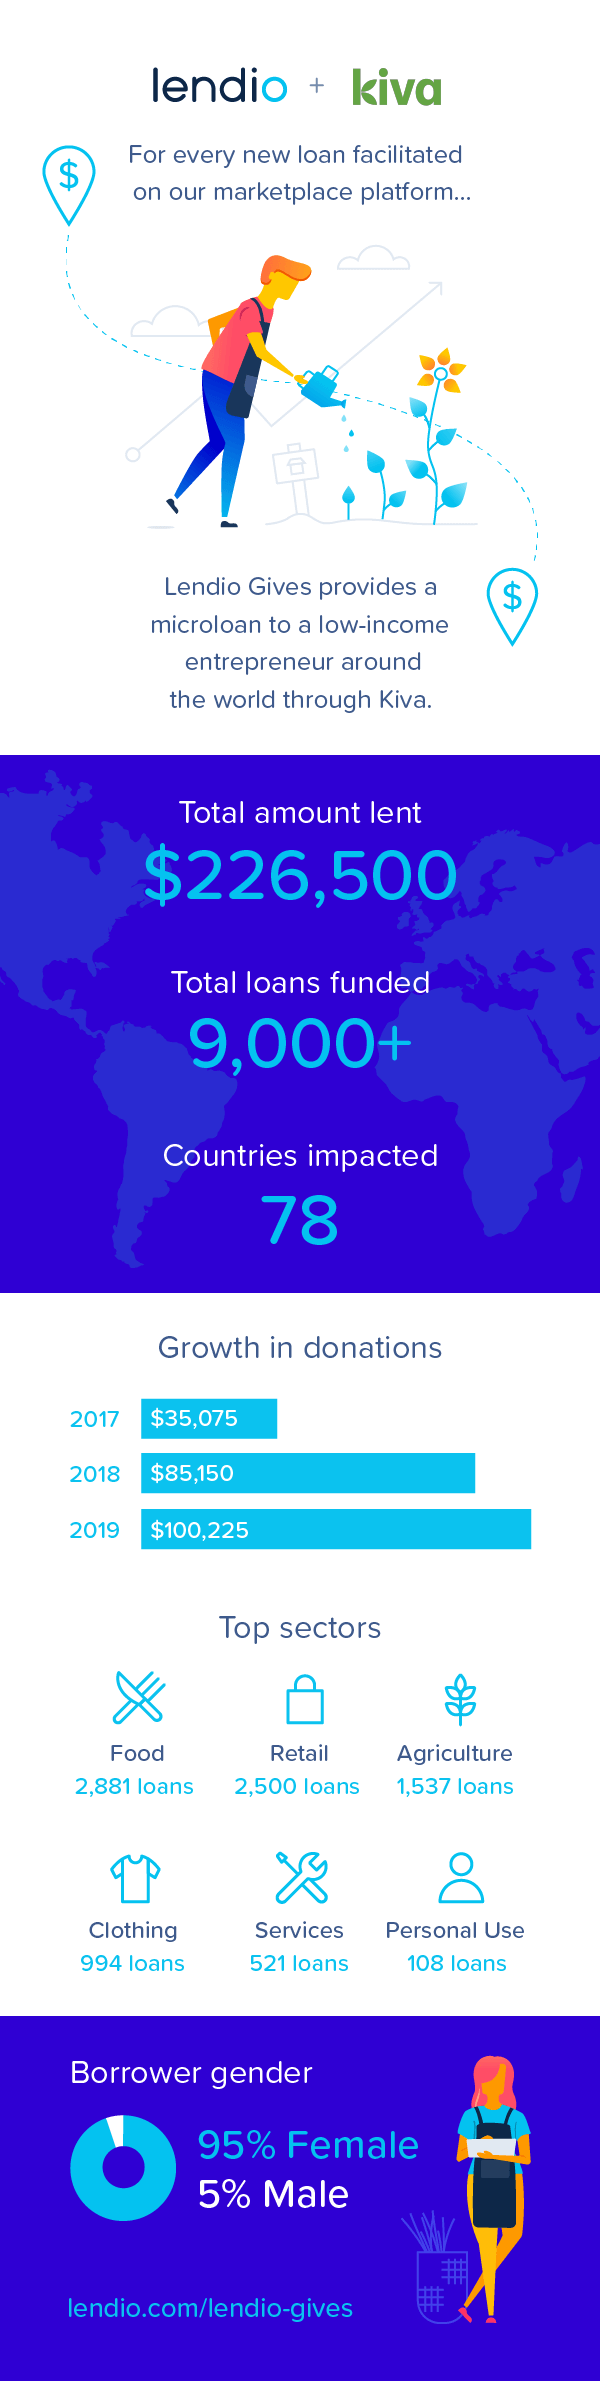 Lendio's total donations to Kiva.org